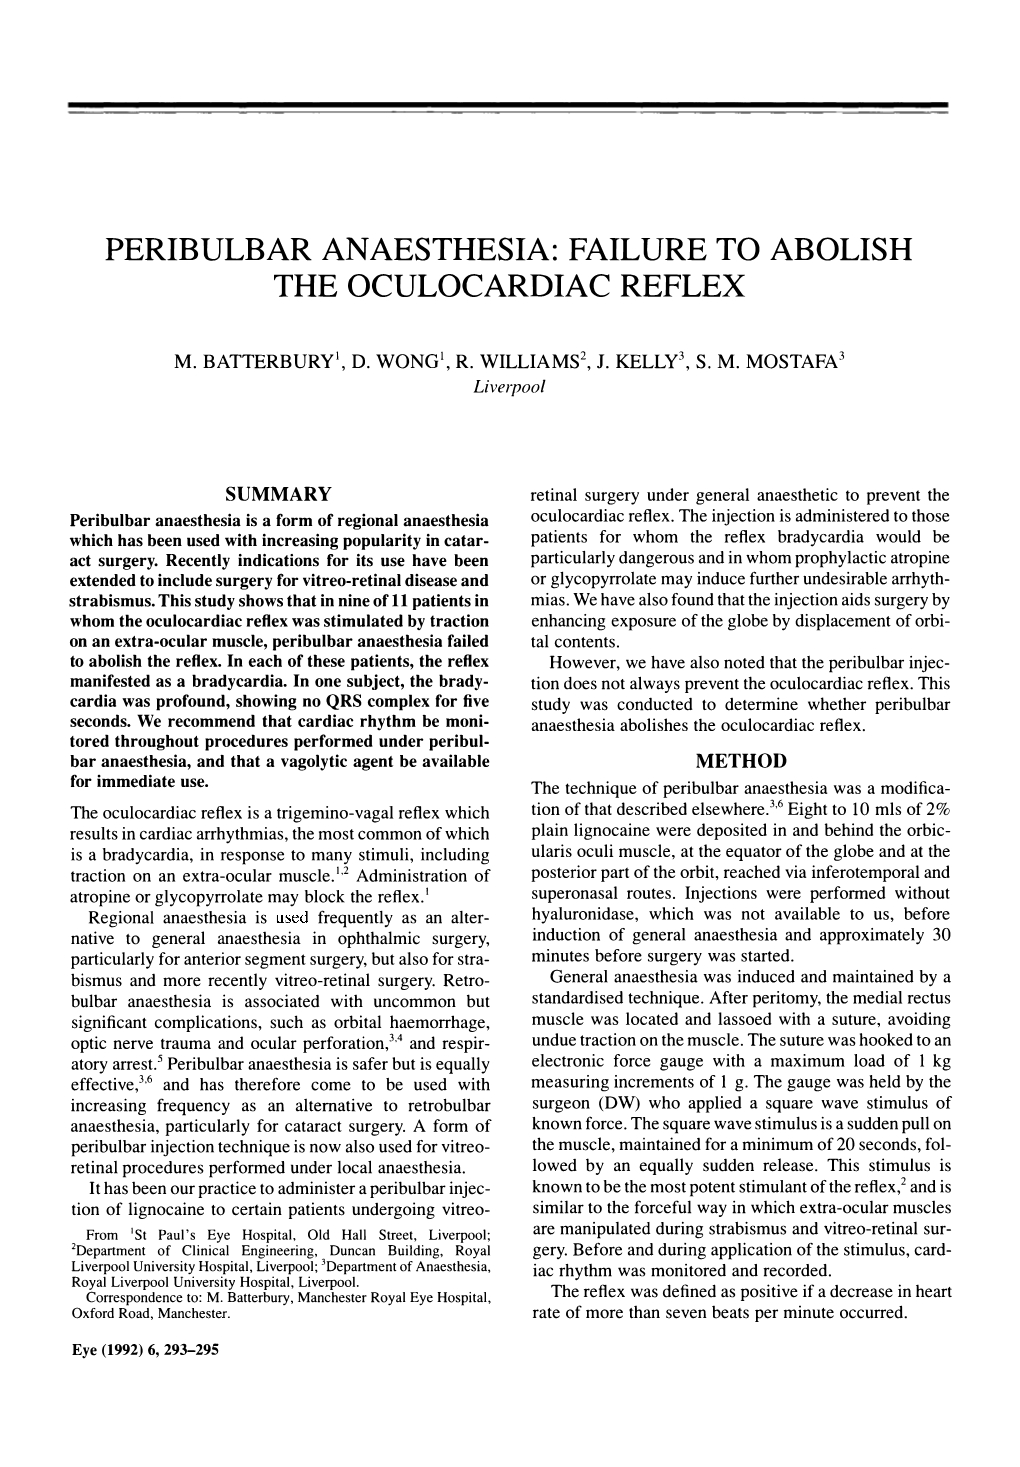 Peribulbar Anaesthesia: Failure to Abolish the Oculocardiac Reflex